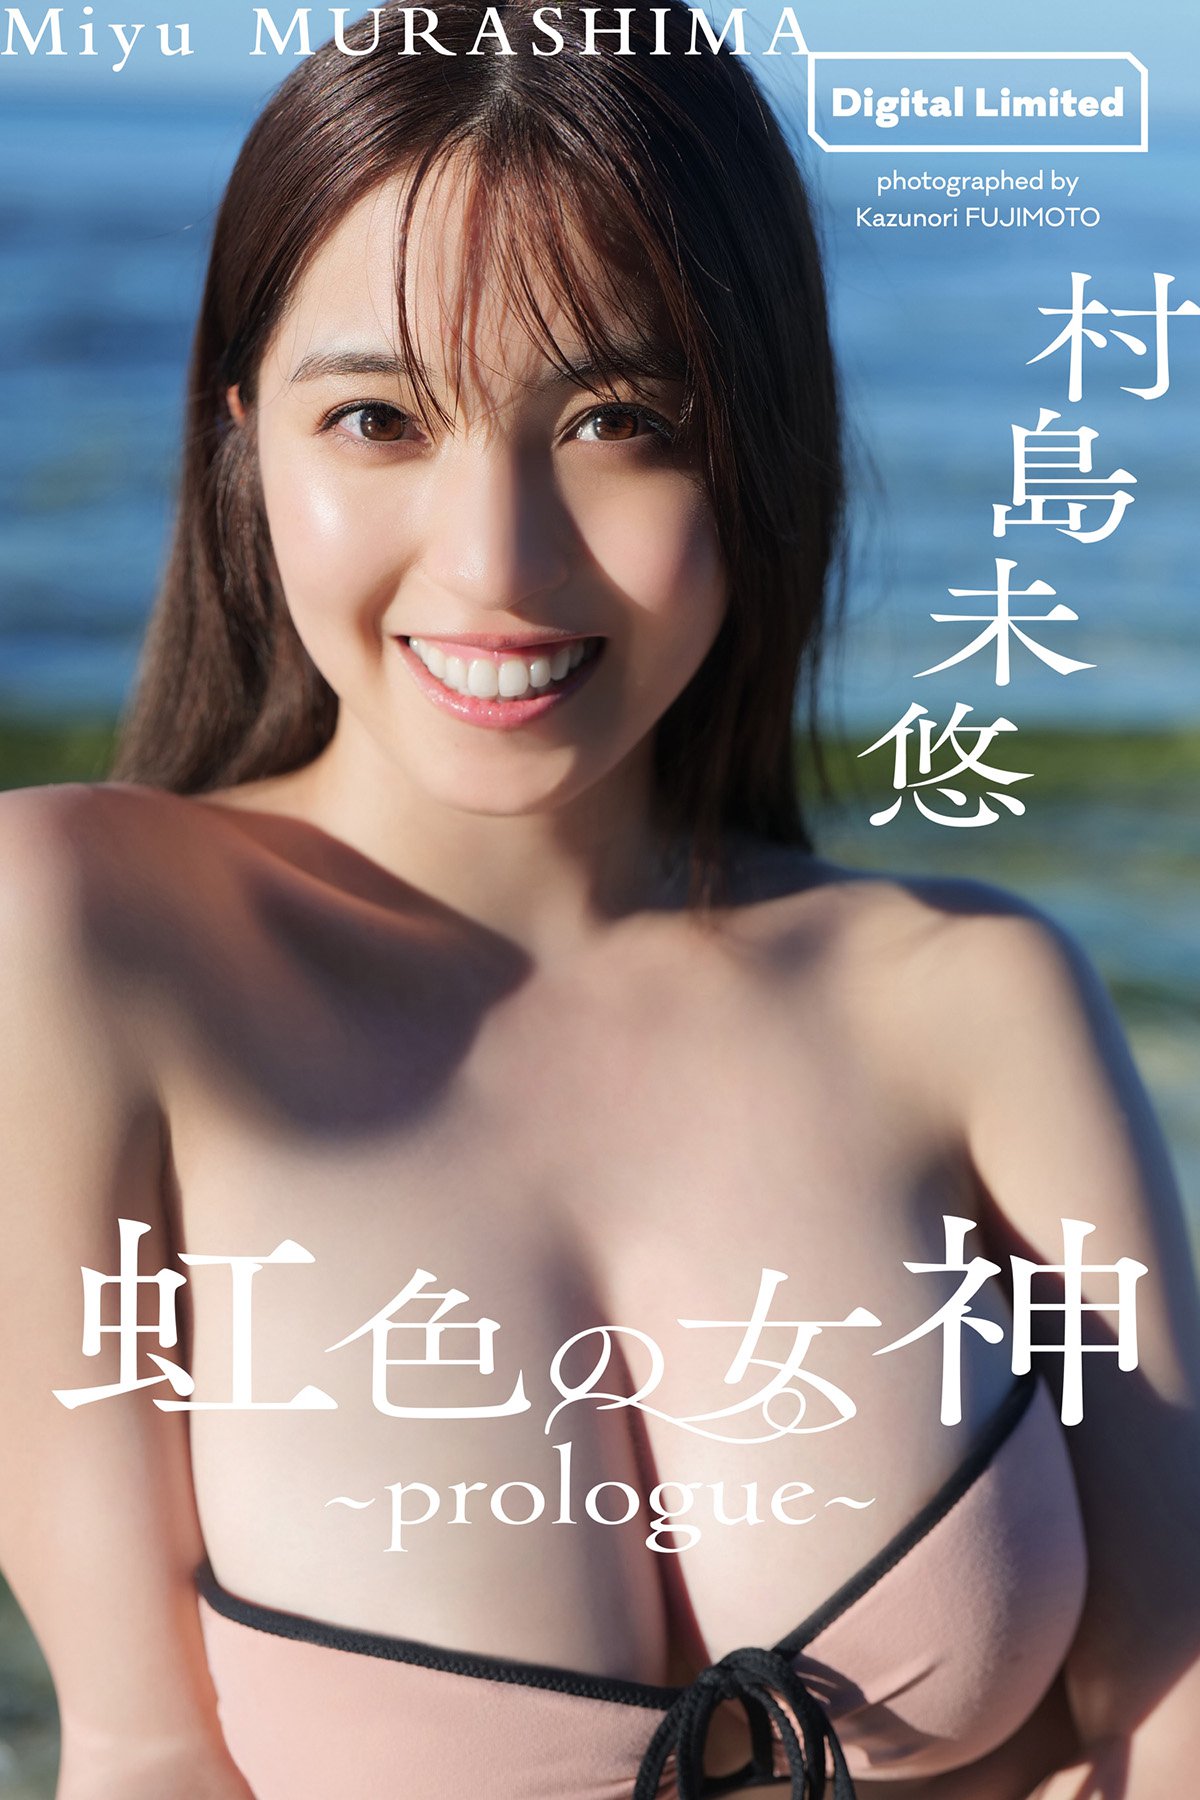 Digital-Limited-Miyu-Murashima-村島未悠-Iridescent-goddess-prologue-2022-07-18  - BestGirlSexy